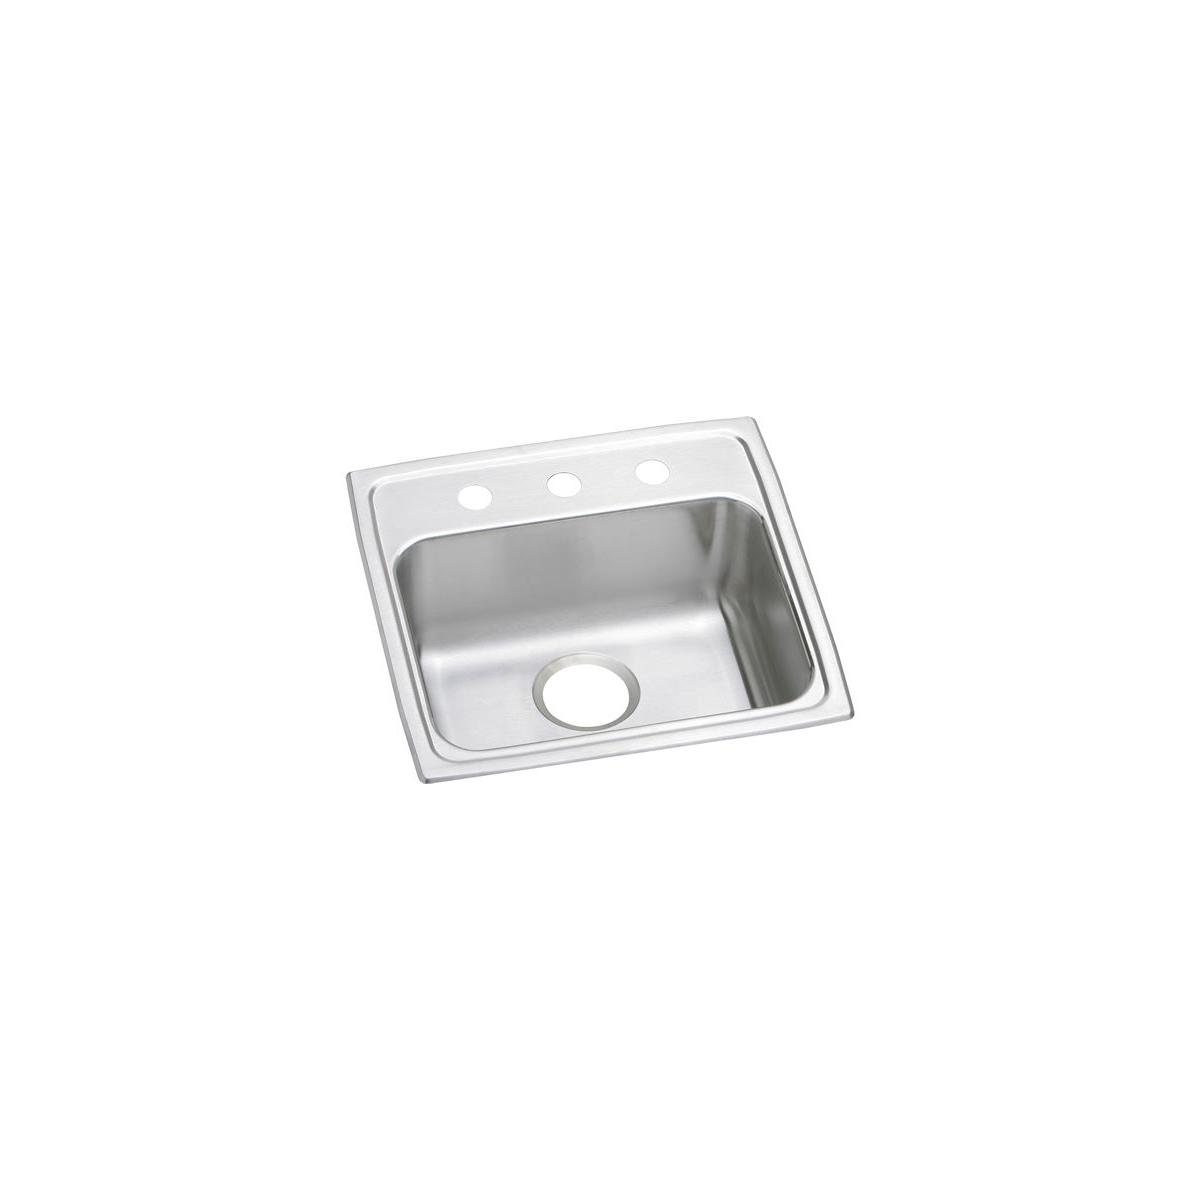 Elkay Lustertone Classic 19" x 18" x 4" MR2-Hole Single Bowl Drop-in ADA Sink